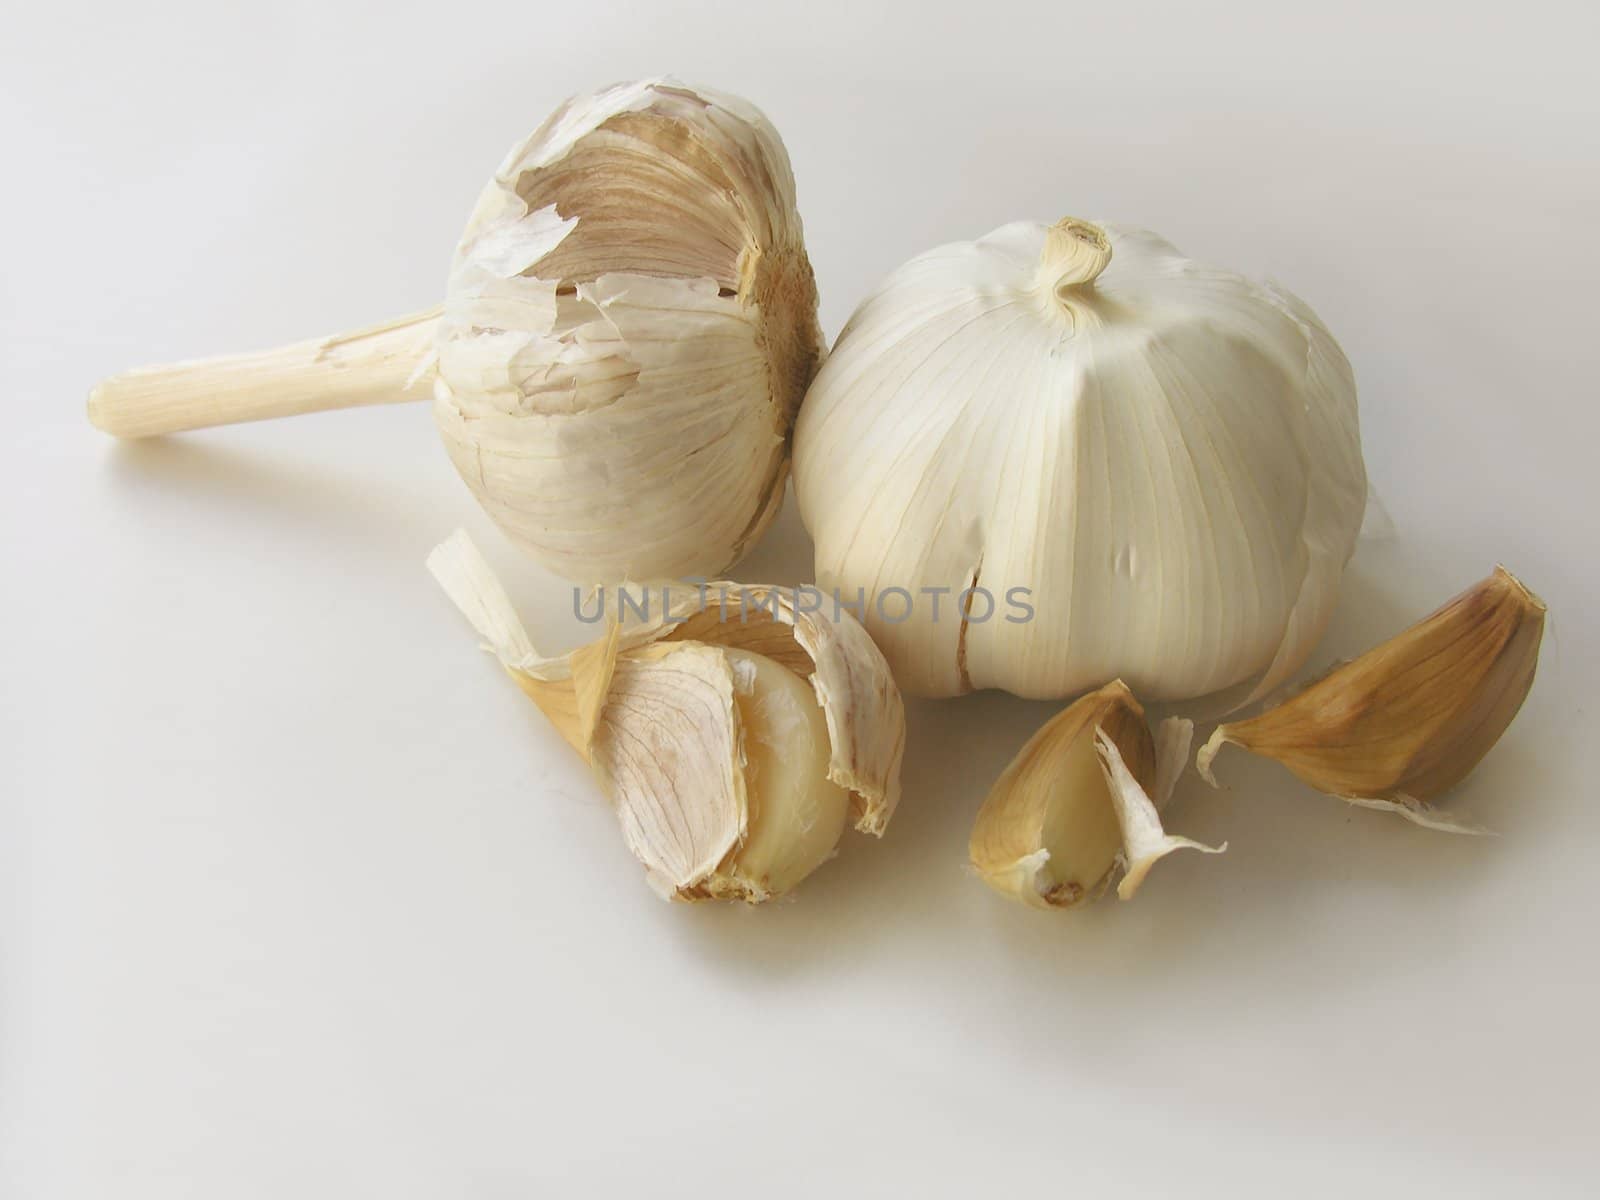 garlic as spice,vegetable or natural medicine